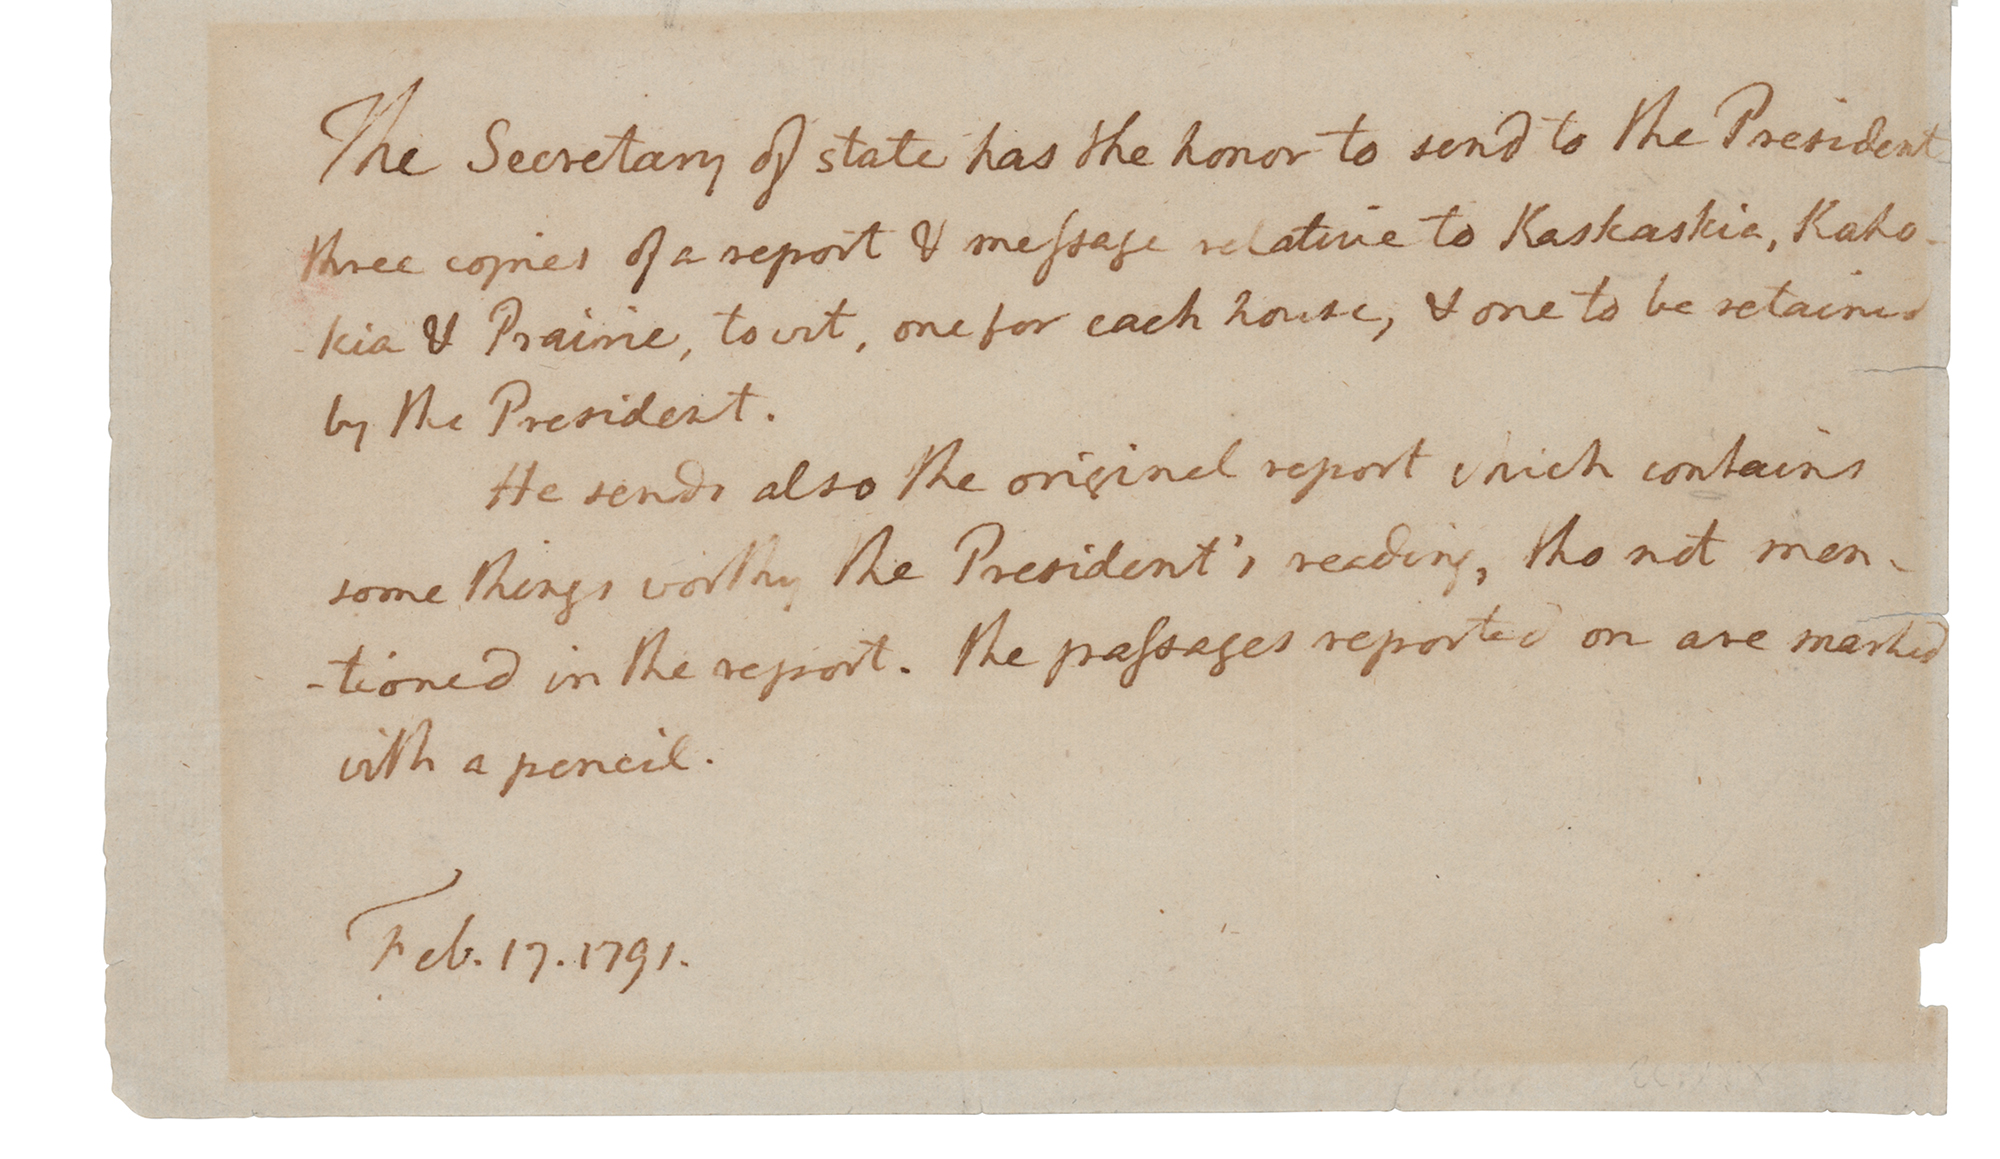 Lot #3 Thomas Jefferson Autograph Letter Signed to George Washington - Image 1